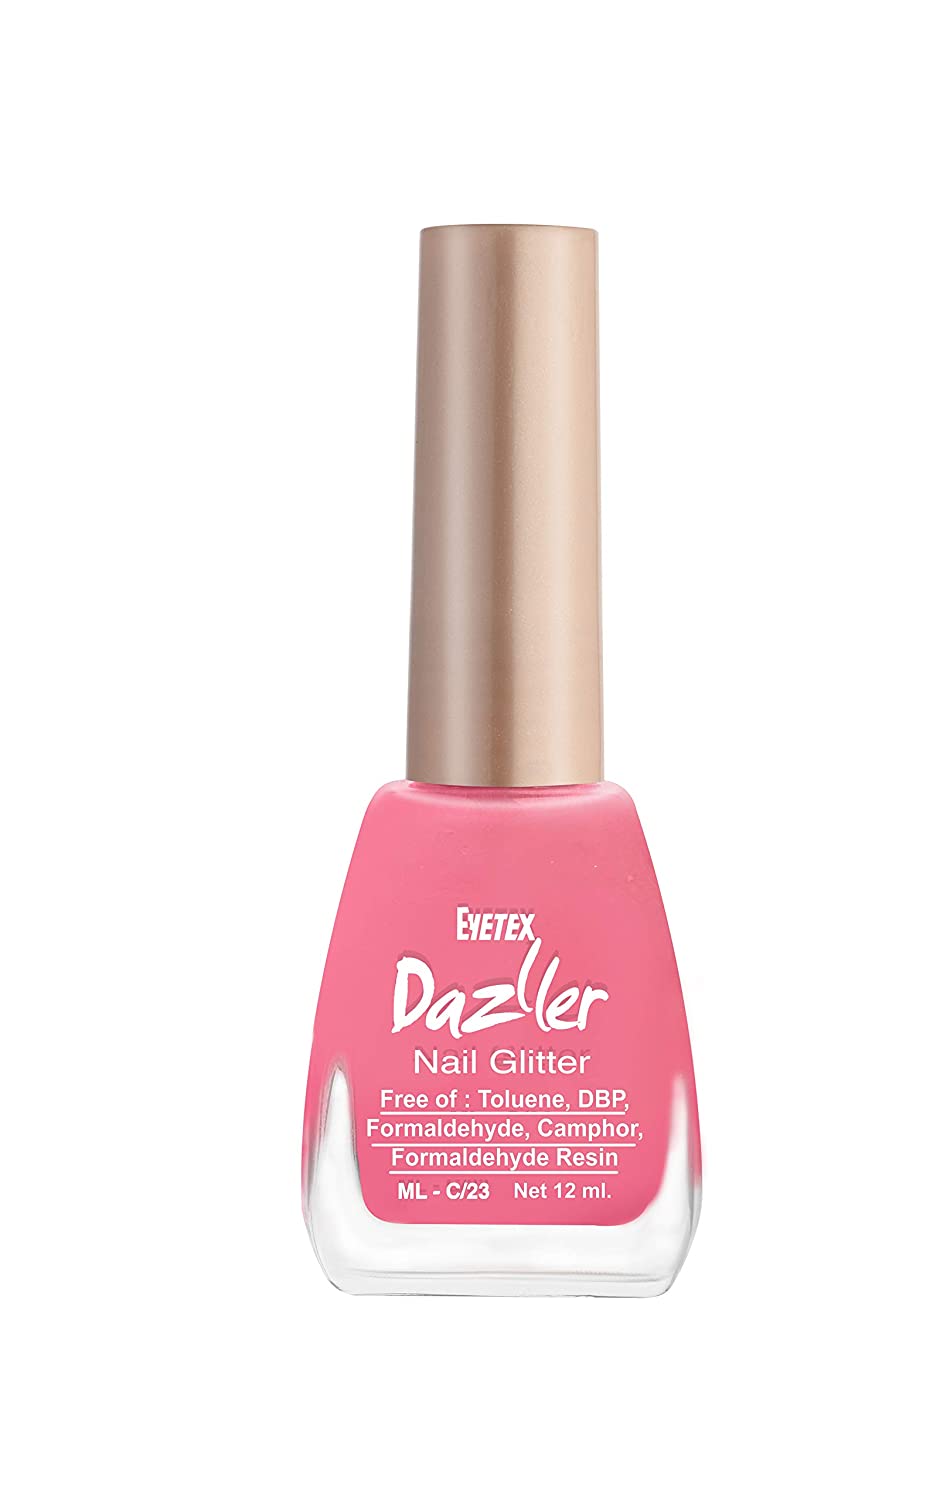 Eyetex Dazzler Nail Enamel Nail Glitter Shade D22